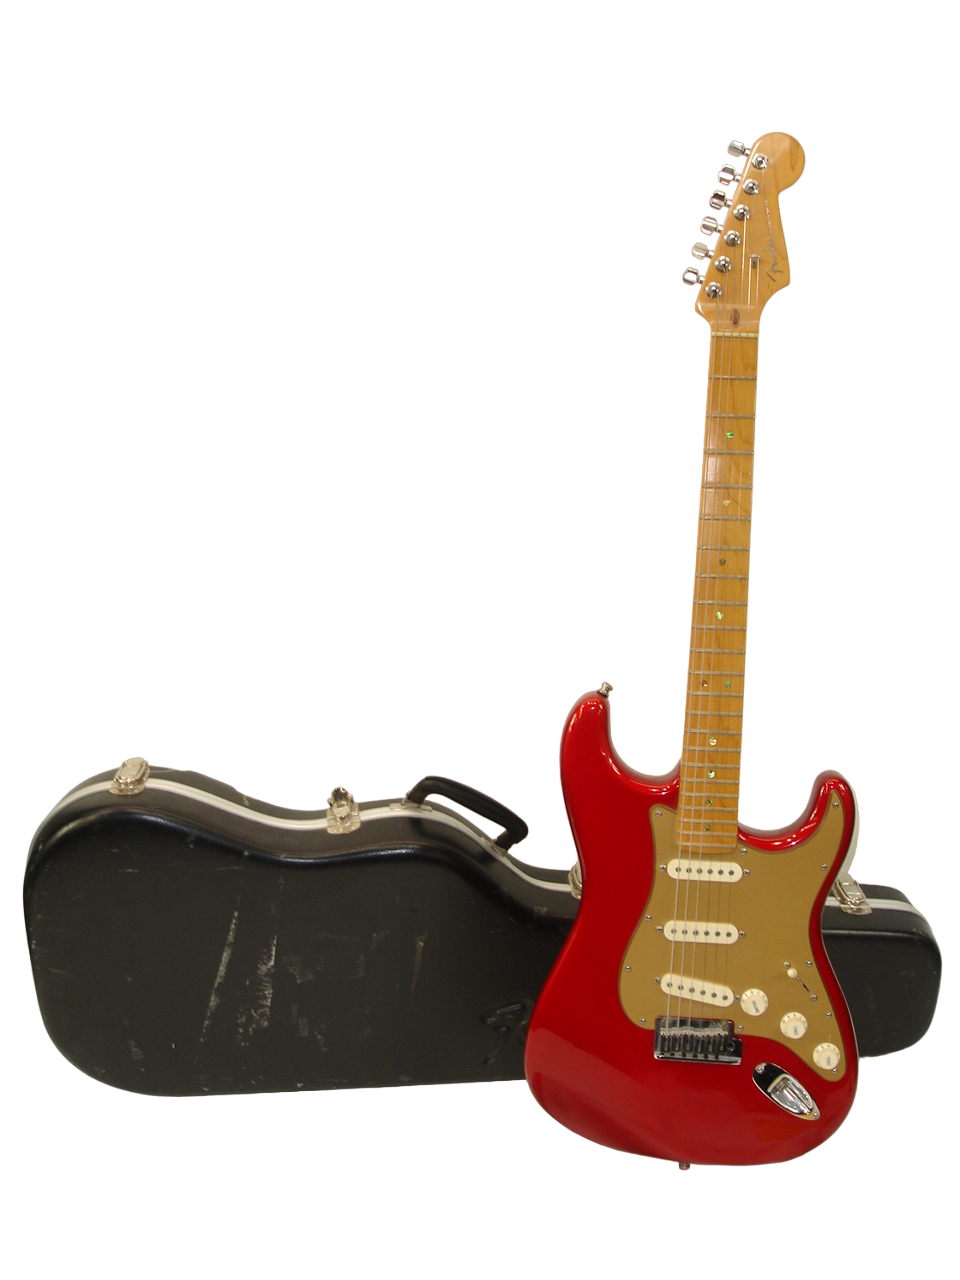 2005 Fender American Deluxe Strat V Neck Electric Guitar